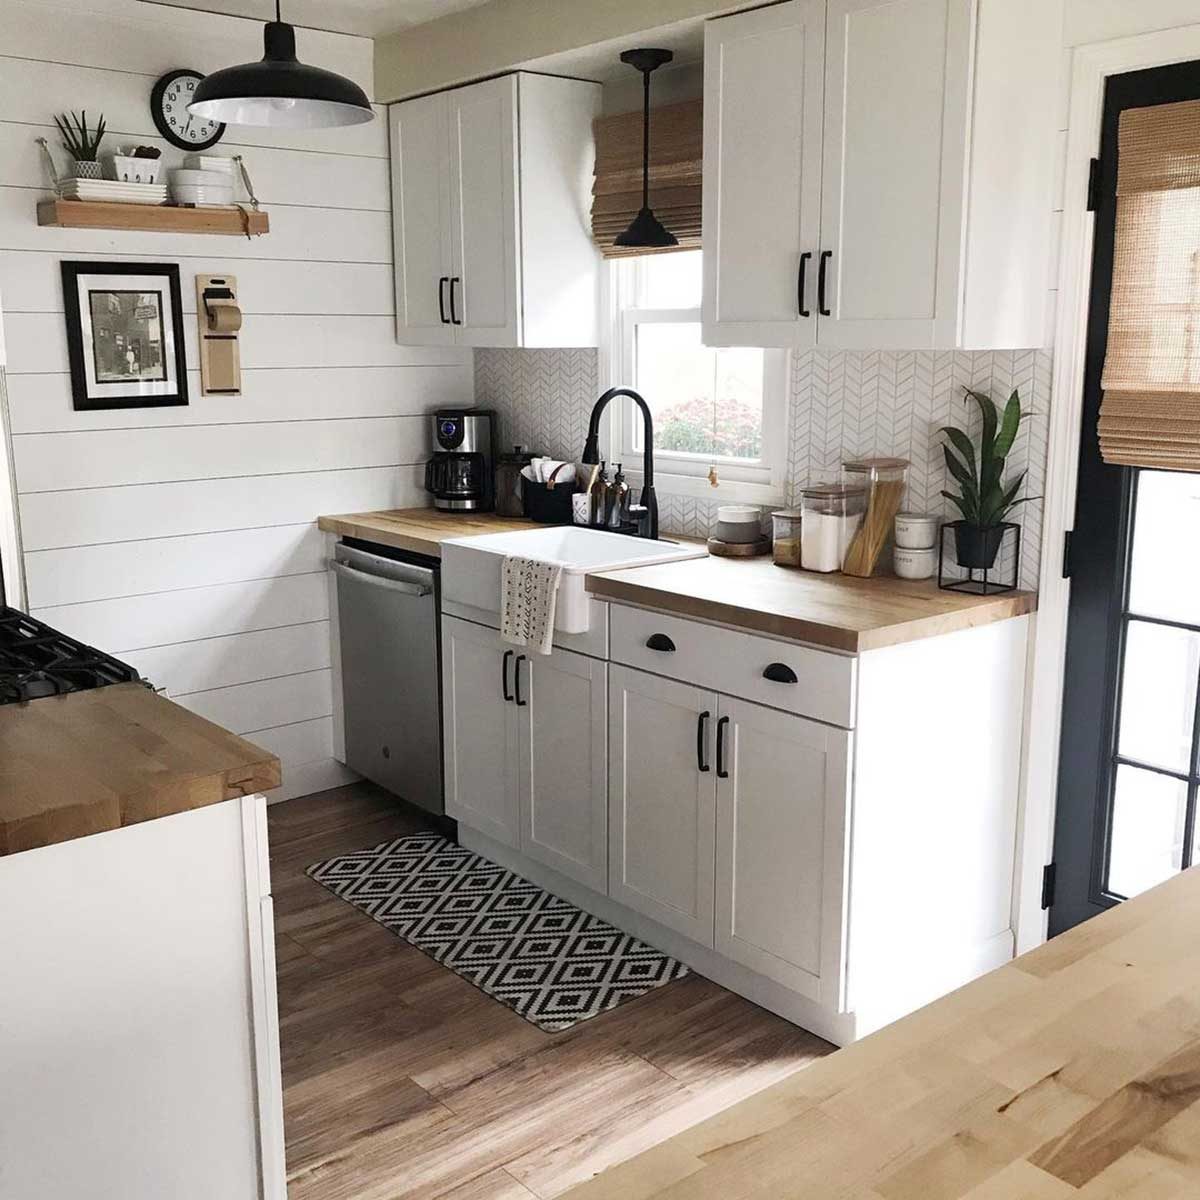 10 Small Kitchen Decor and Design Ideas The Family Handyman